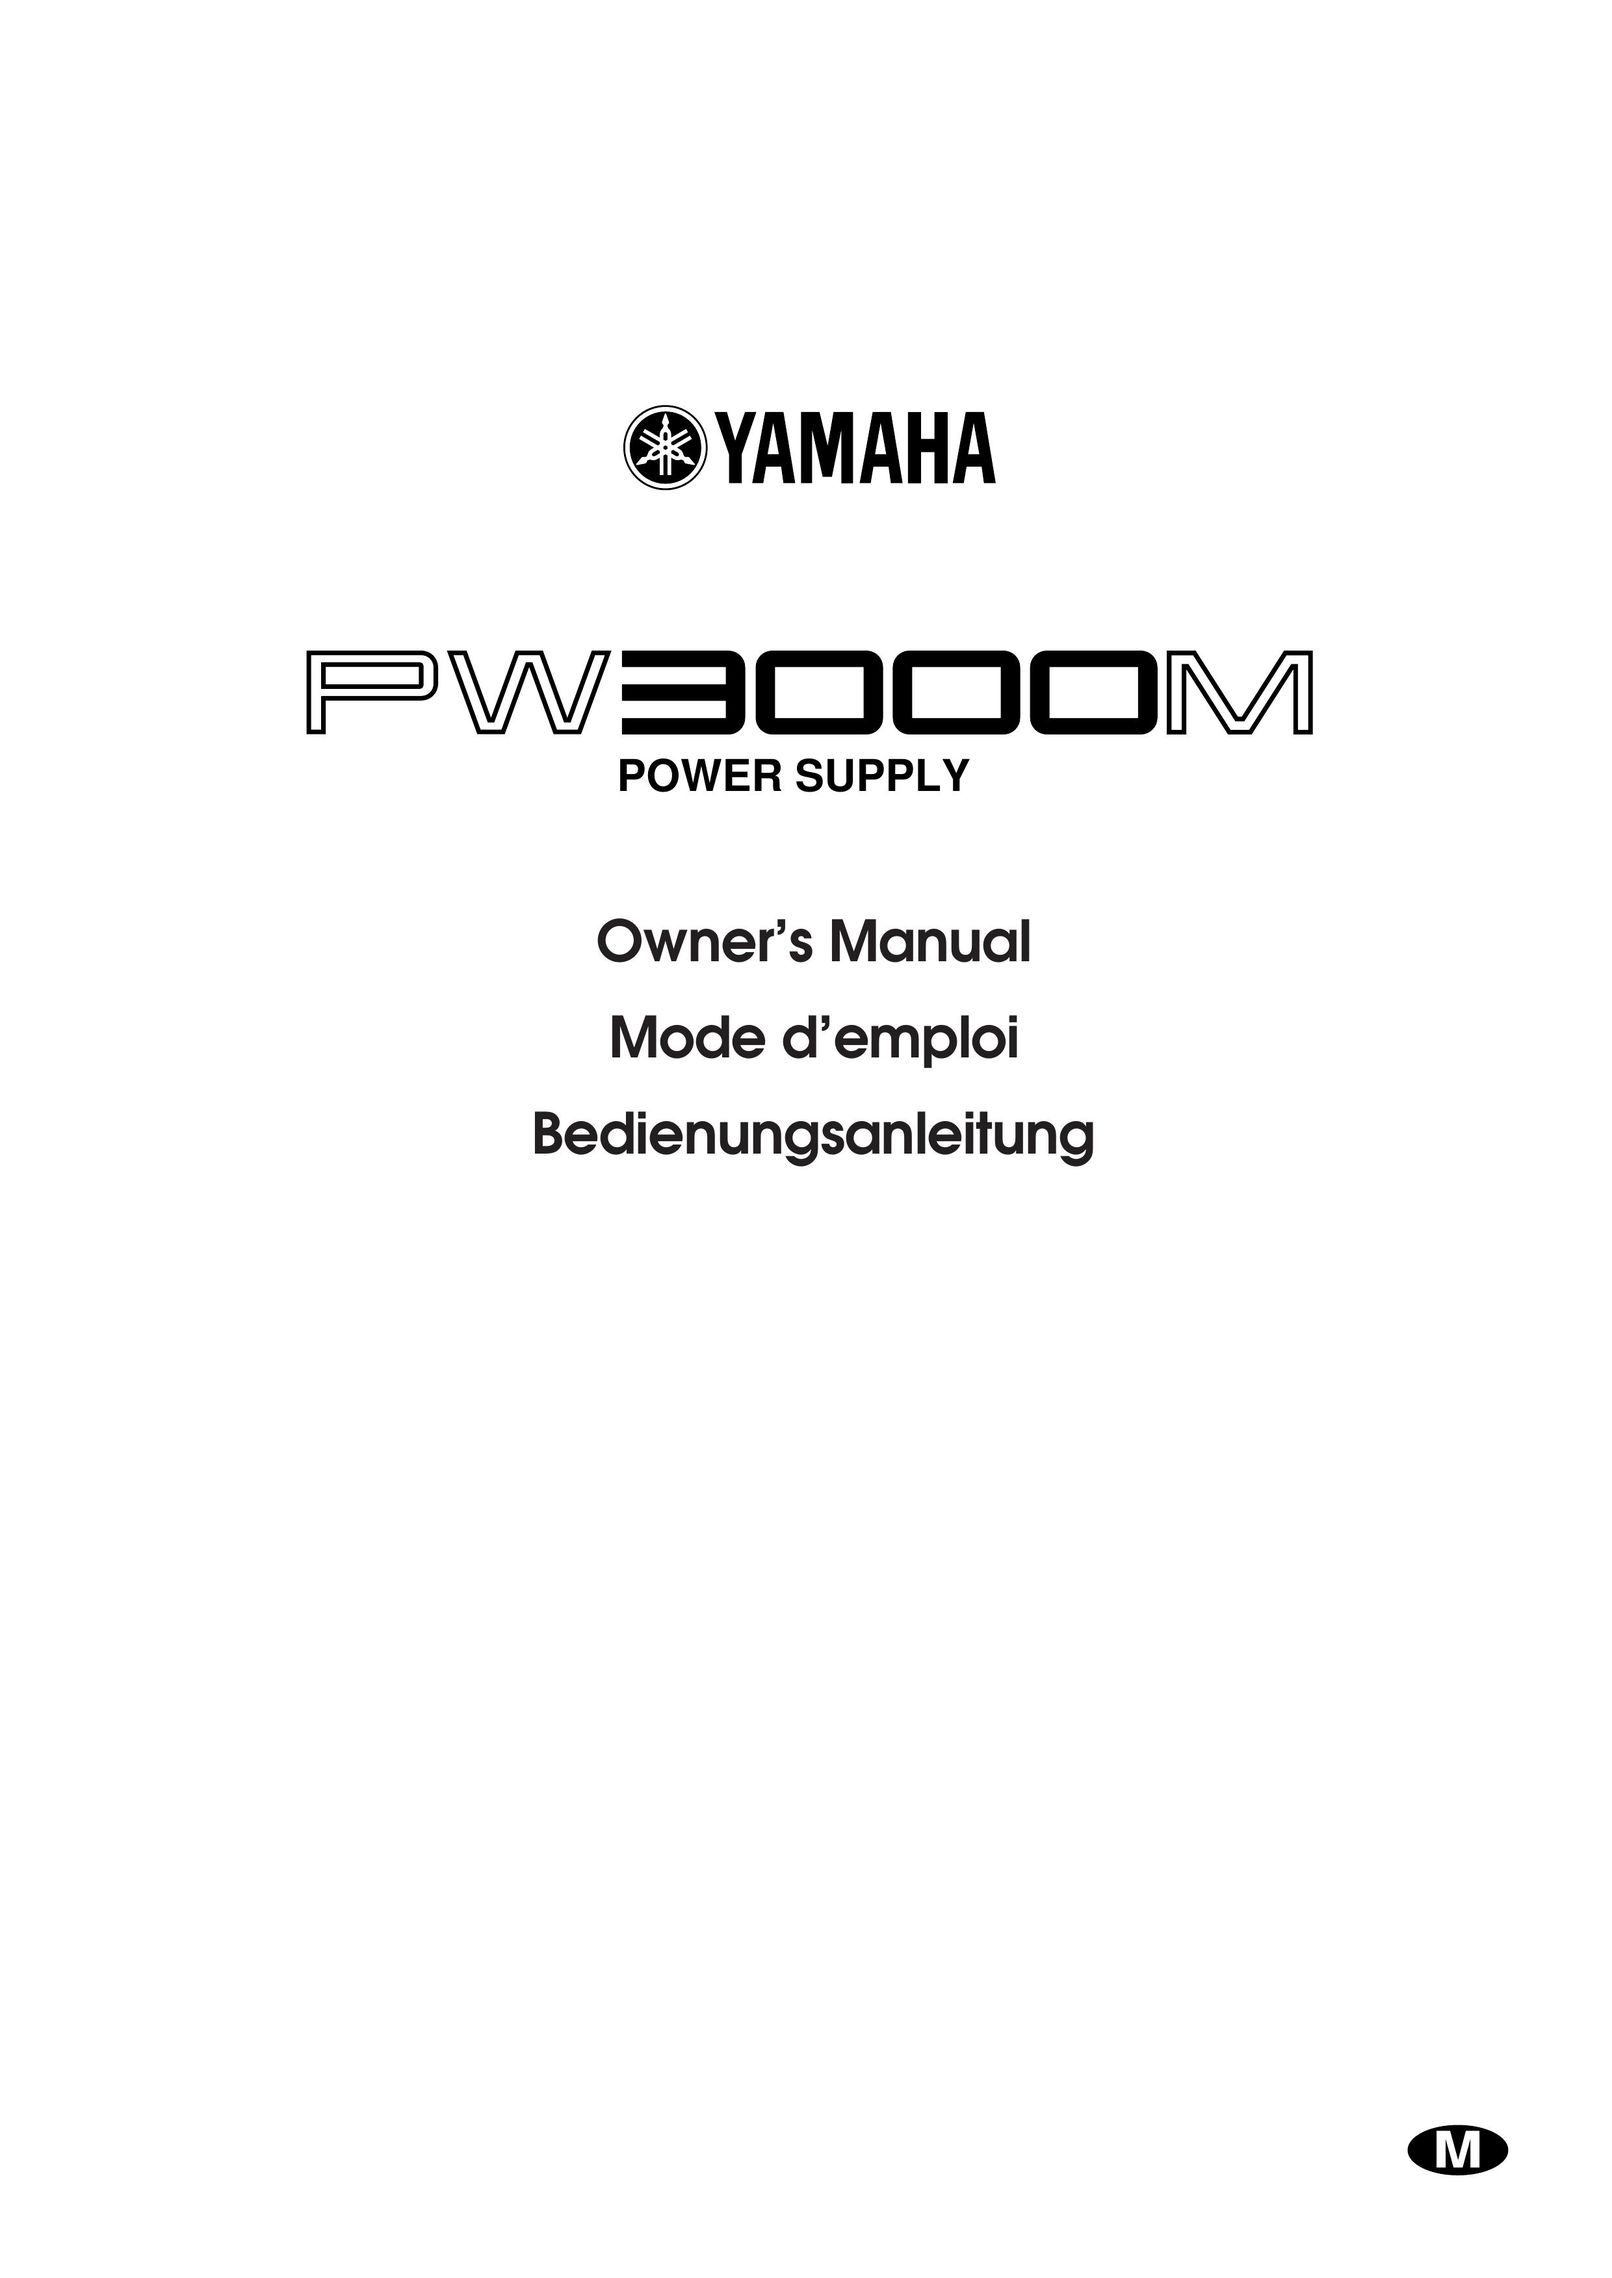 Yamaha PW3000M Power Supply User Manual